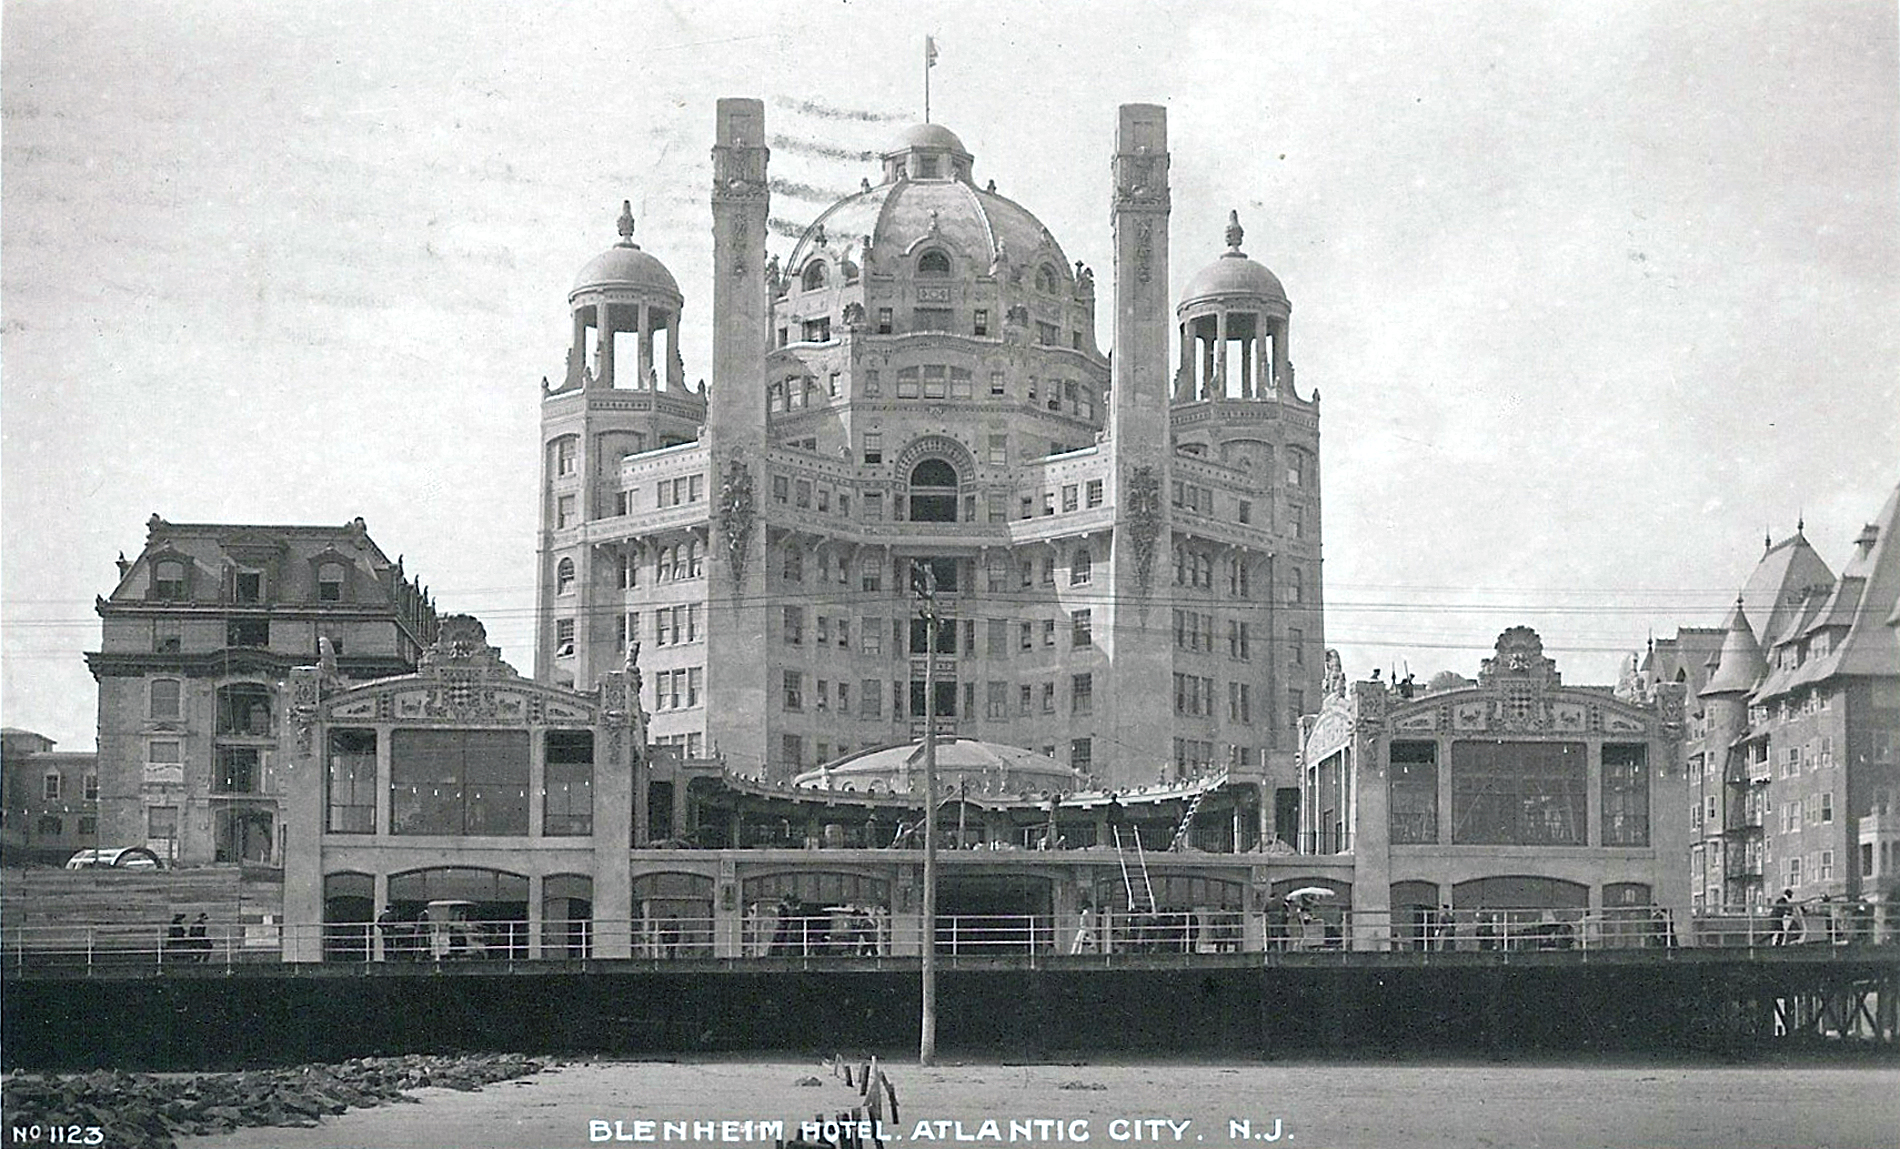 Atlantic City - Blenheim Hotel - c 1910